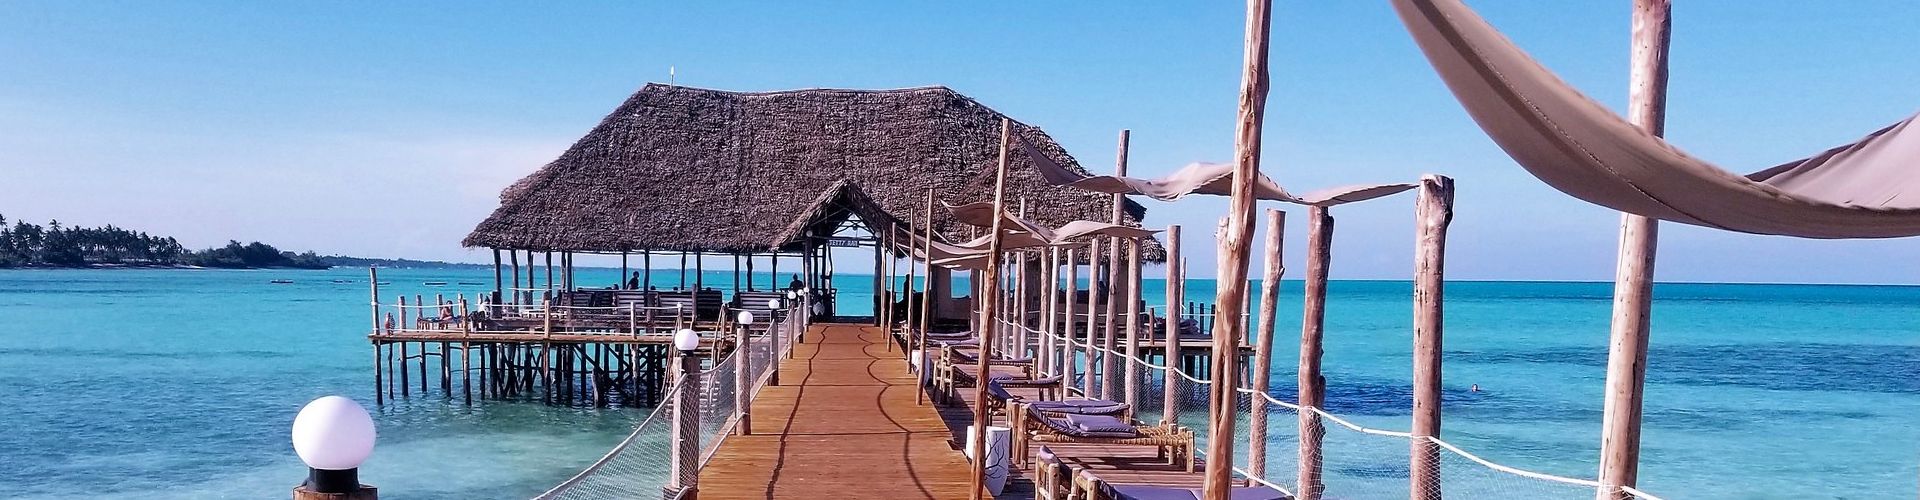 The ocean jetty of the Reef & Beach Hotel Zanzibar